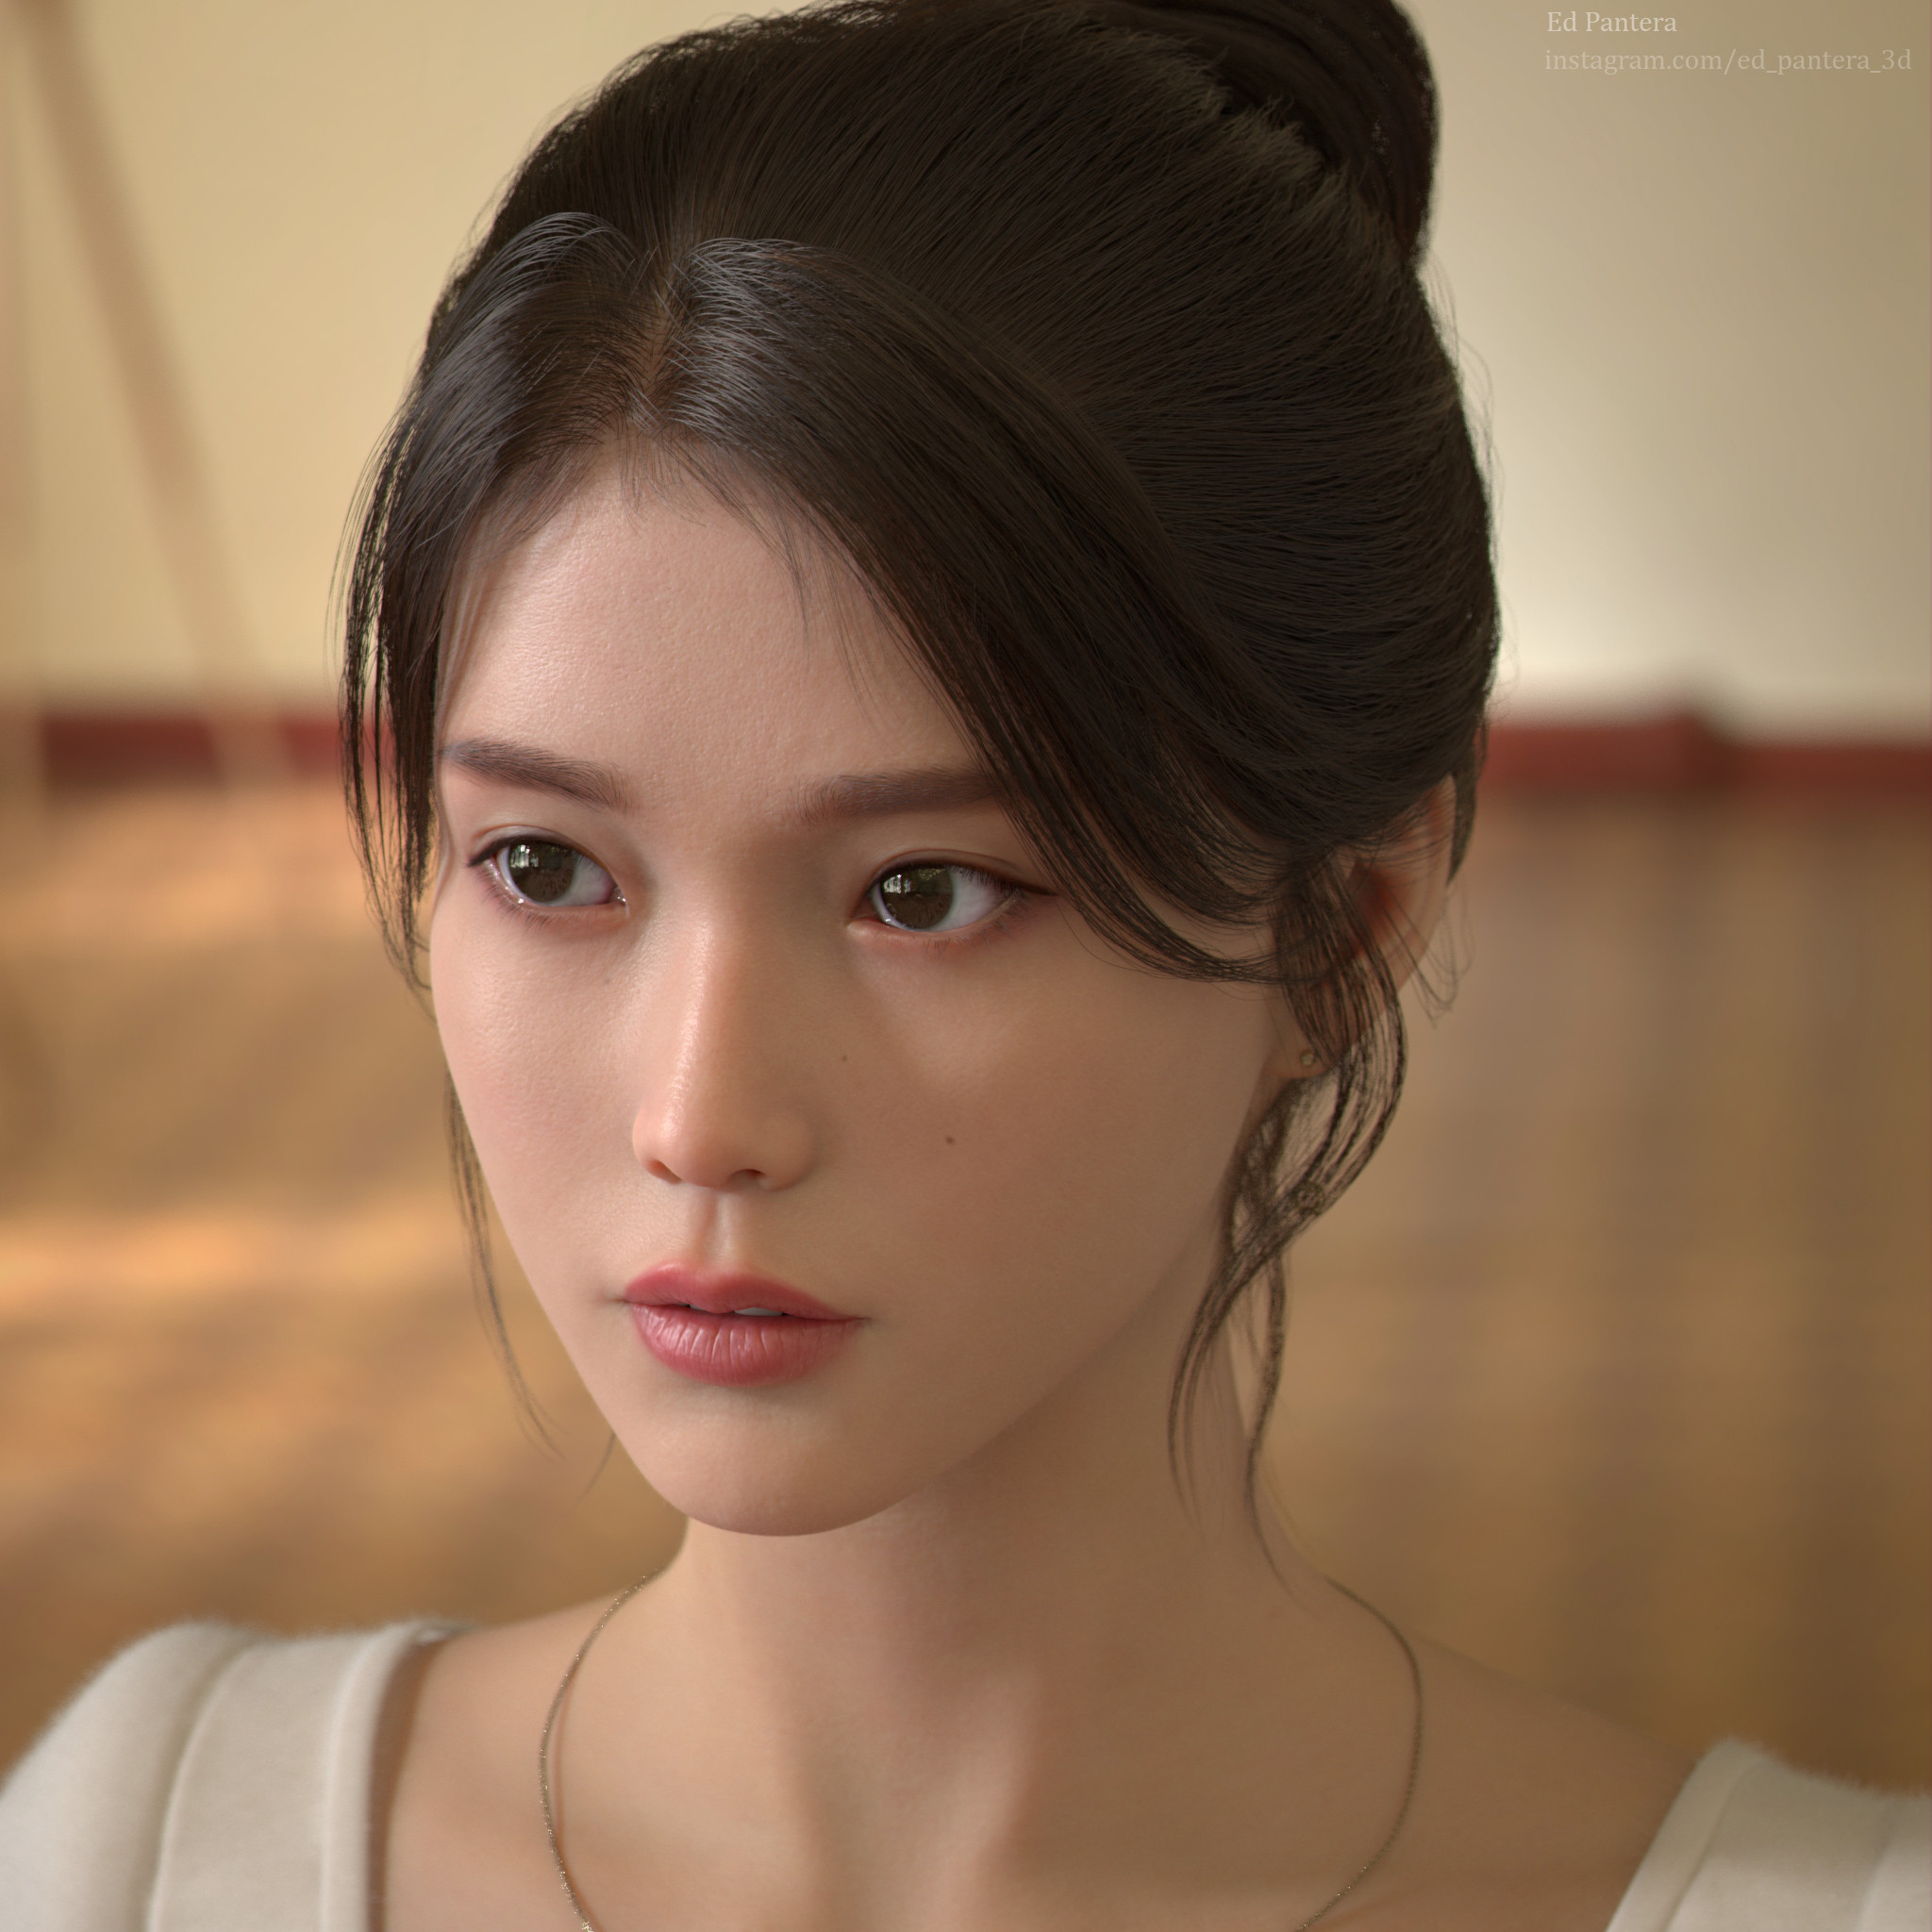 Ed Pantera CGi Asian Women Dark Hair Hairbun Looking Away Portrait Indoors 2048x2048